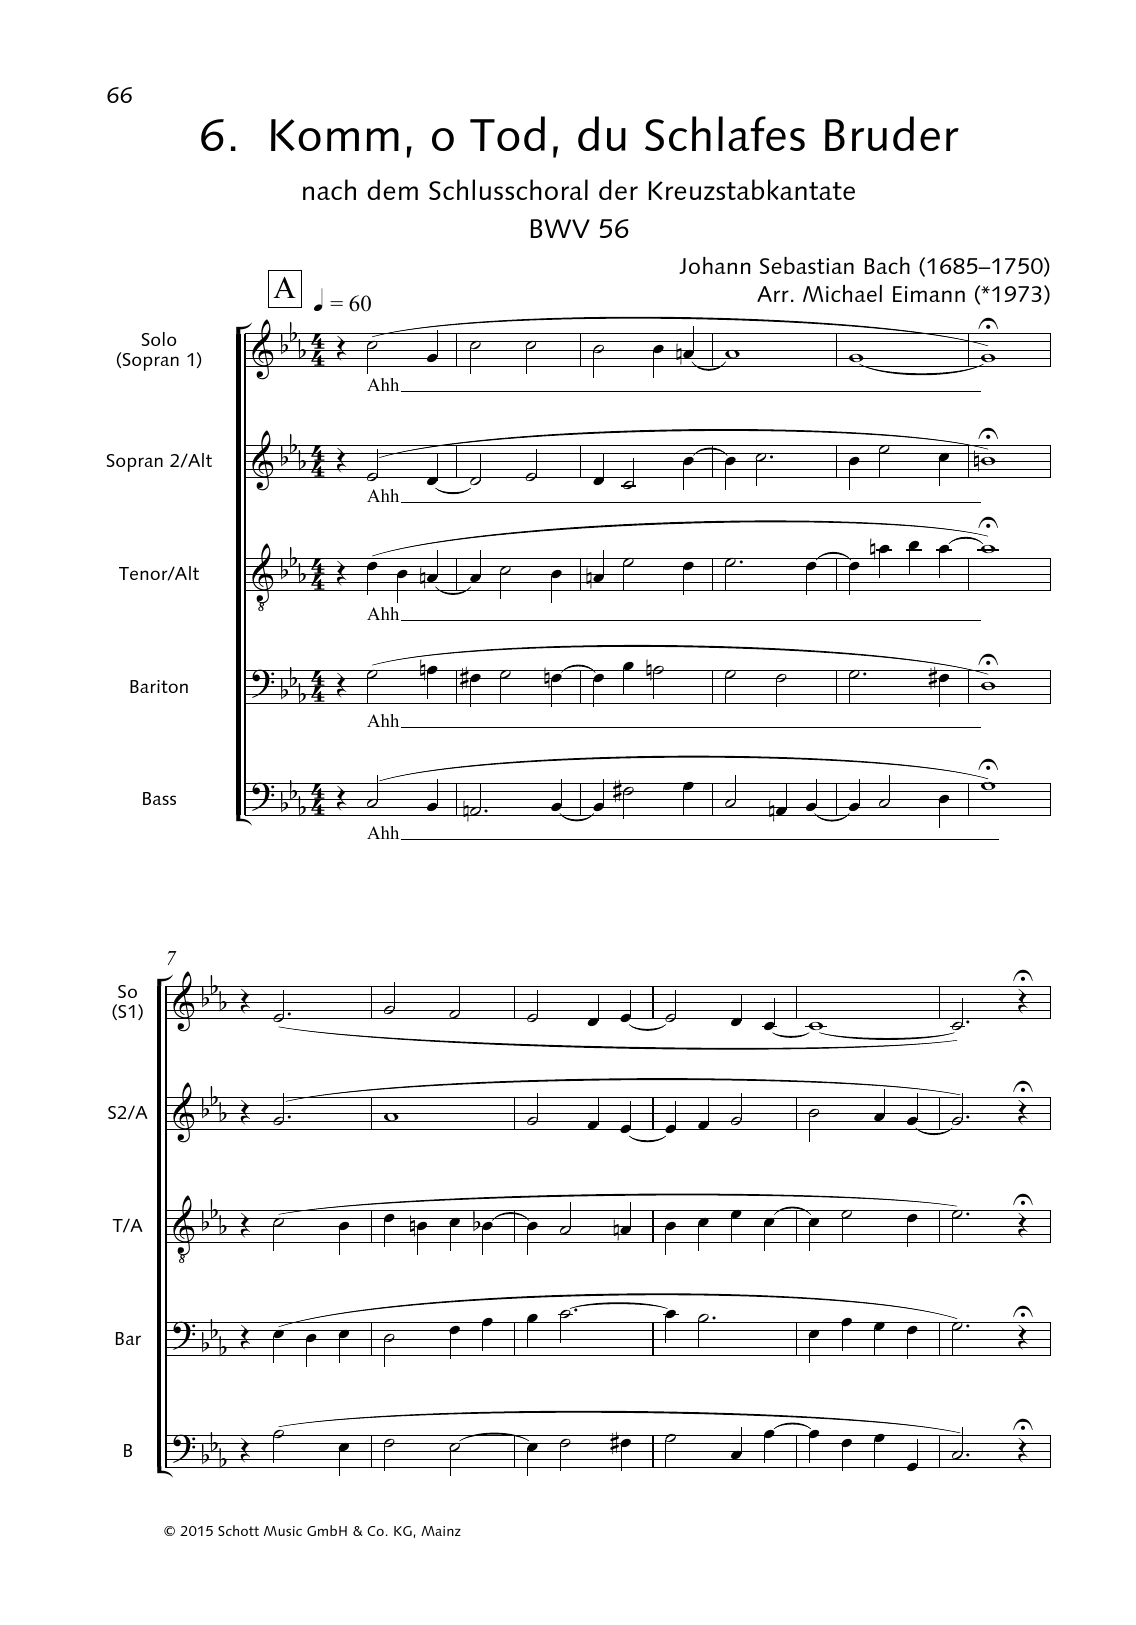 Johann Sebastian Bach Komm, oh Tod, du Schlafes Bruder Sheet Music Notes & Chords for Choral - Download or Print PDF